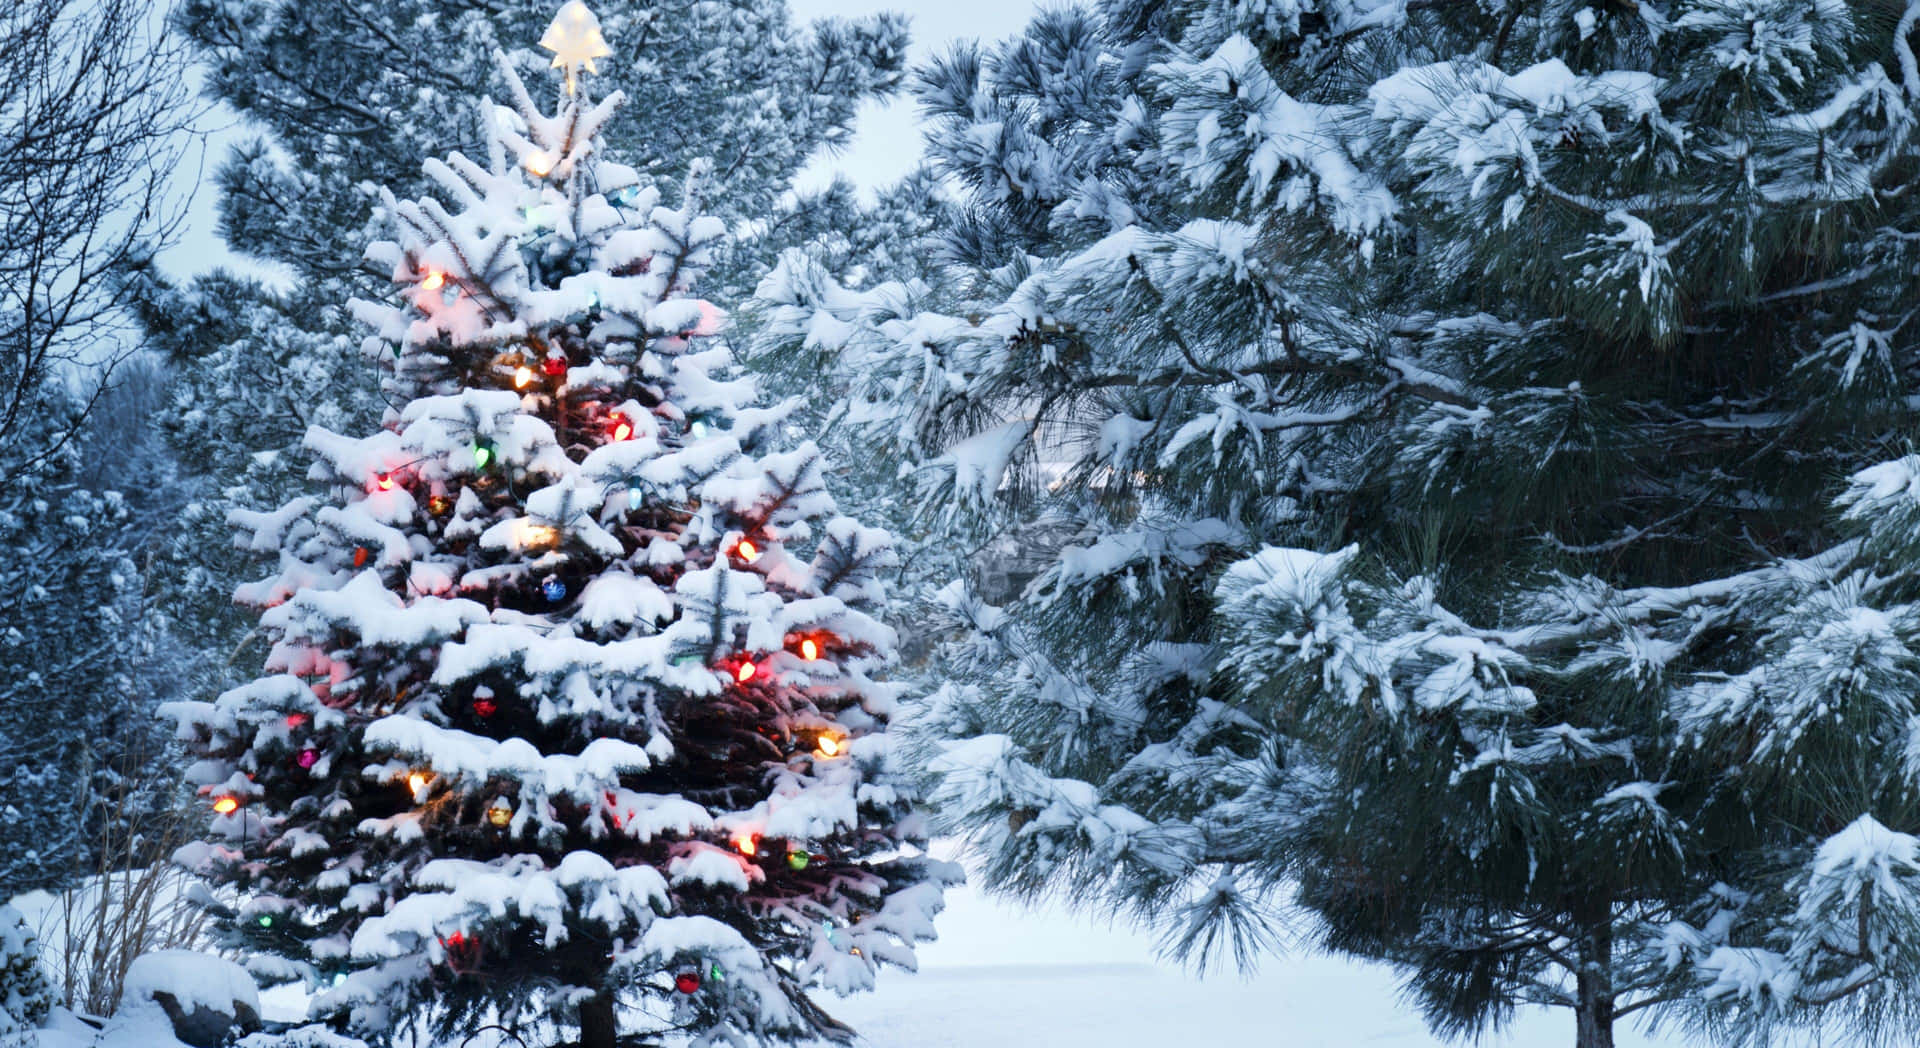 Magical Winter Wonderland on Christmas Eve